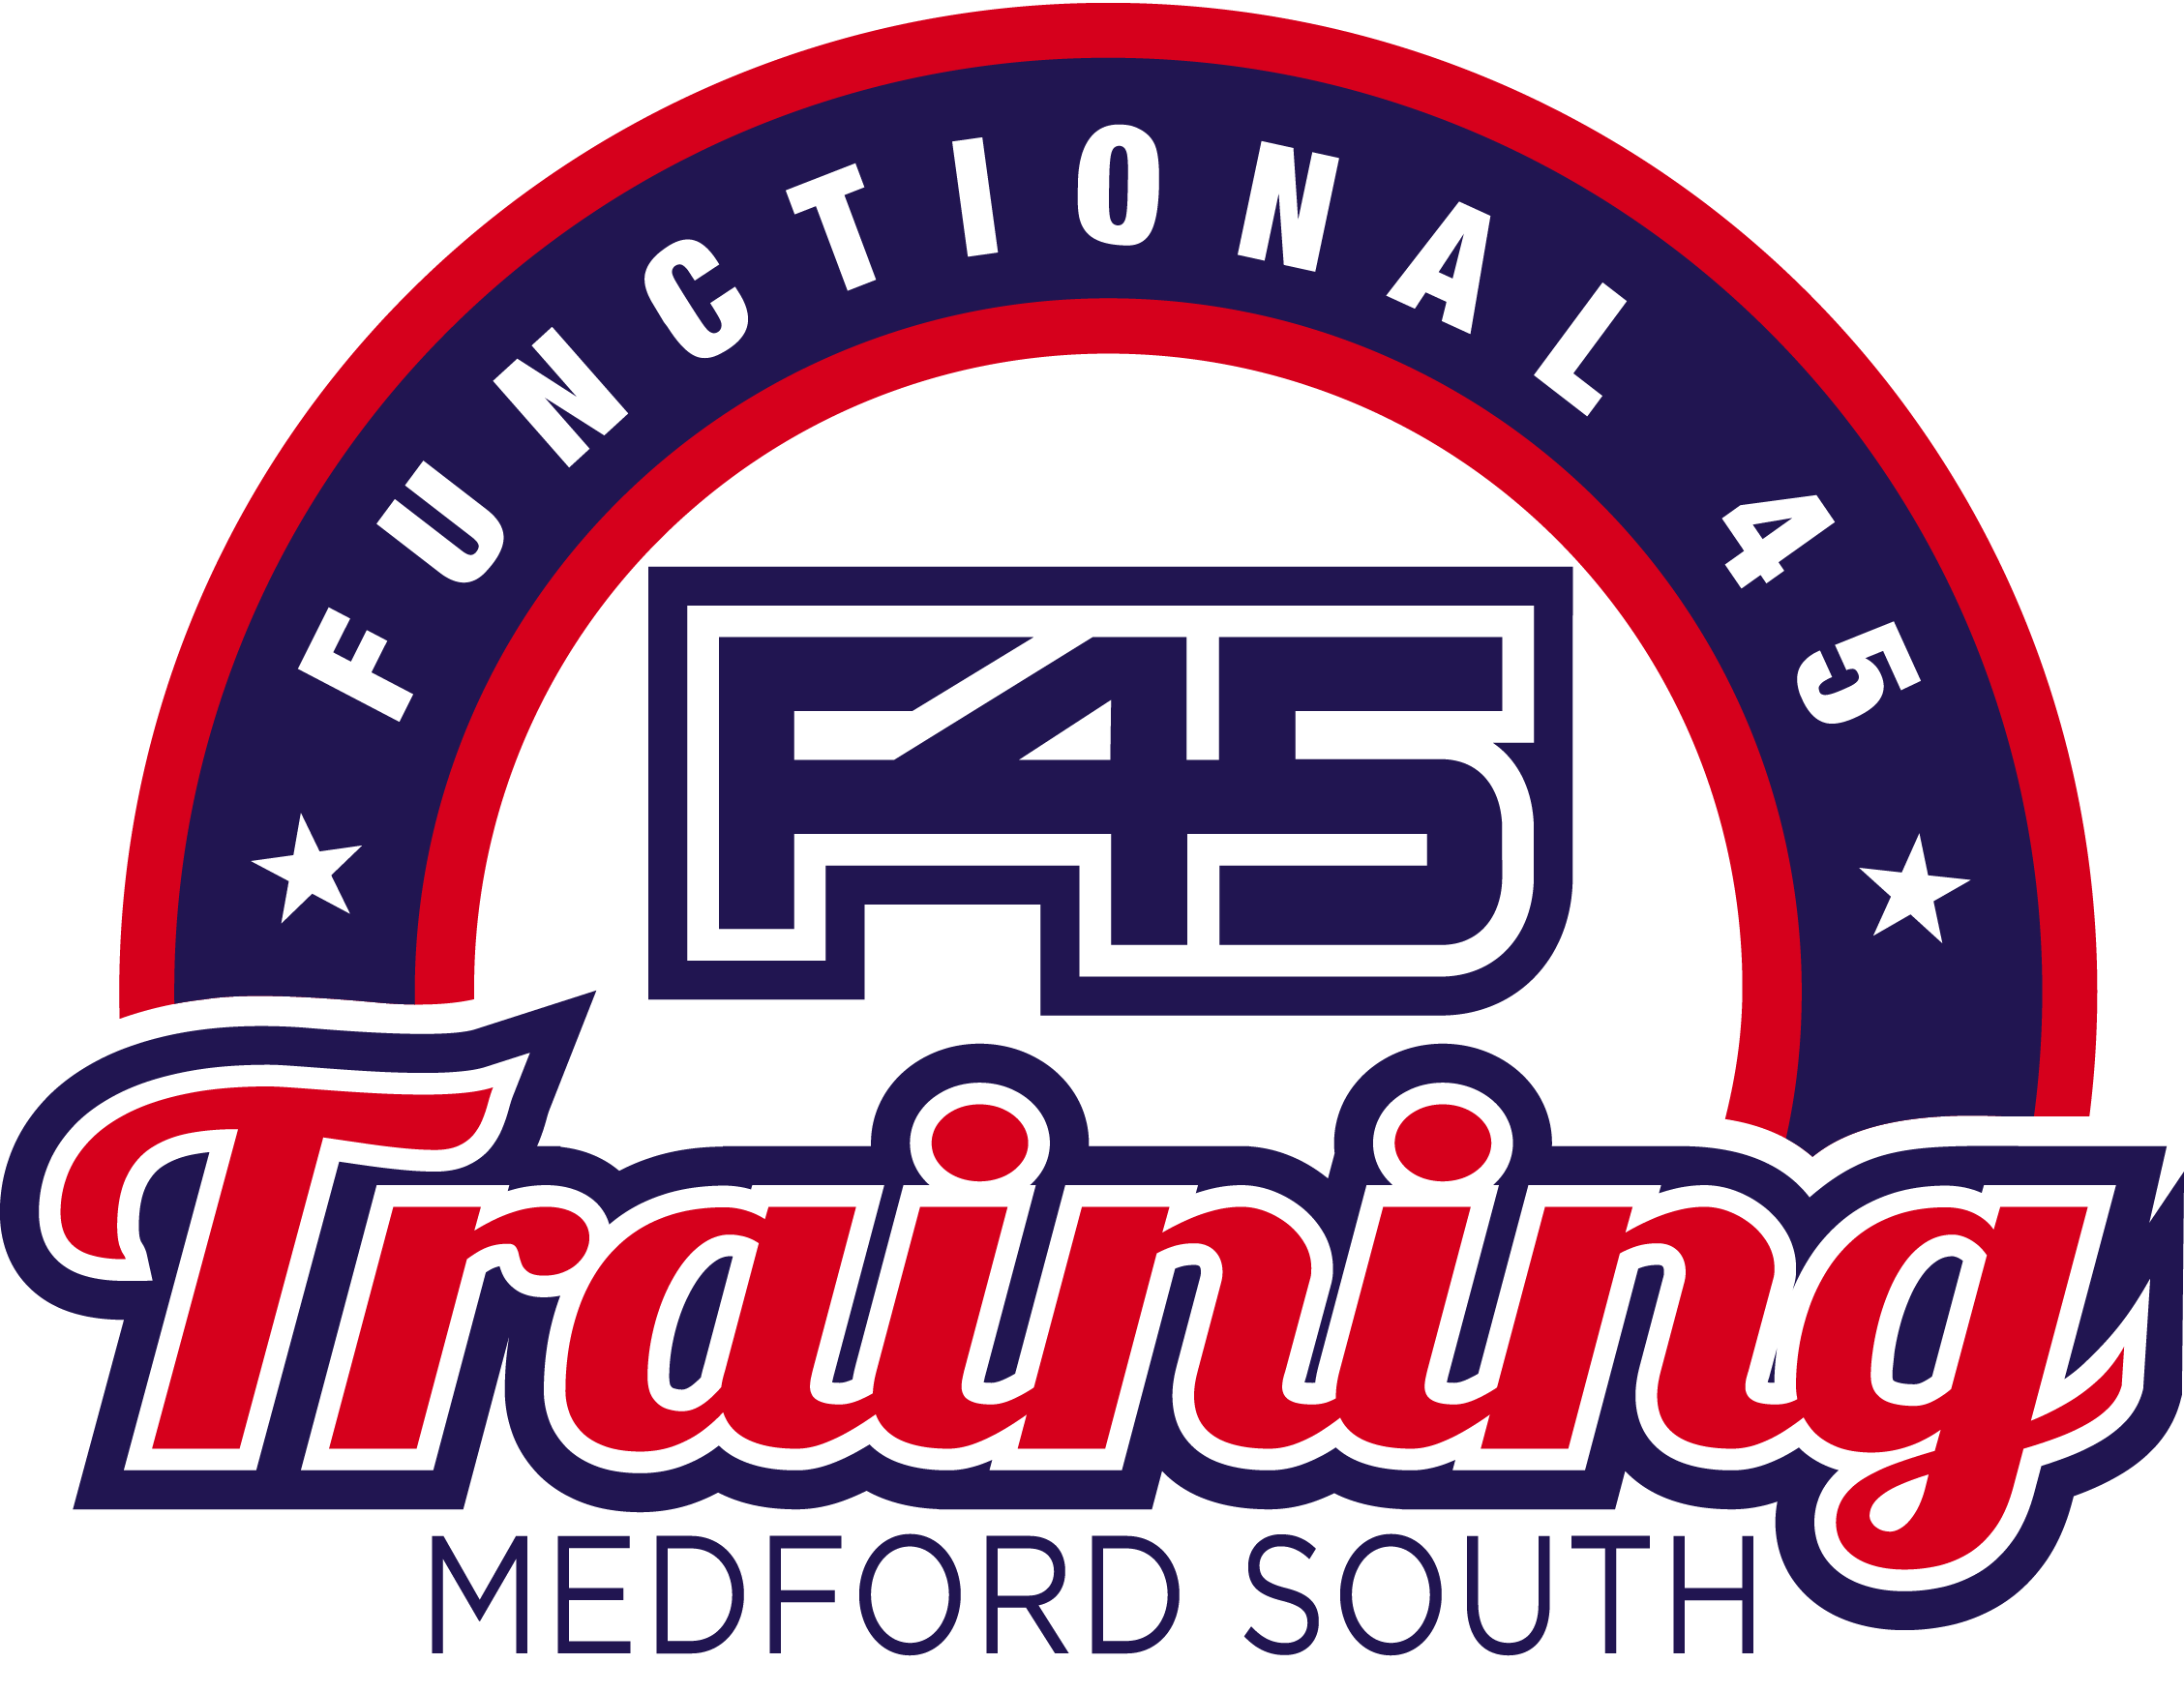 F45-heritage-logo-medford-south